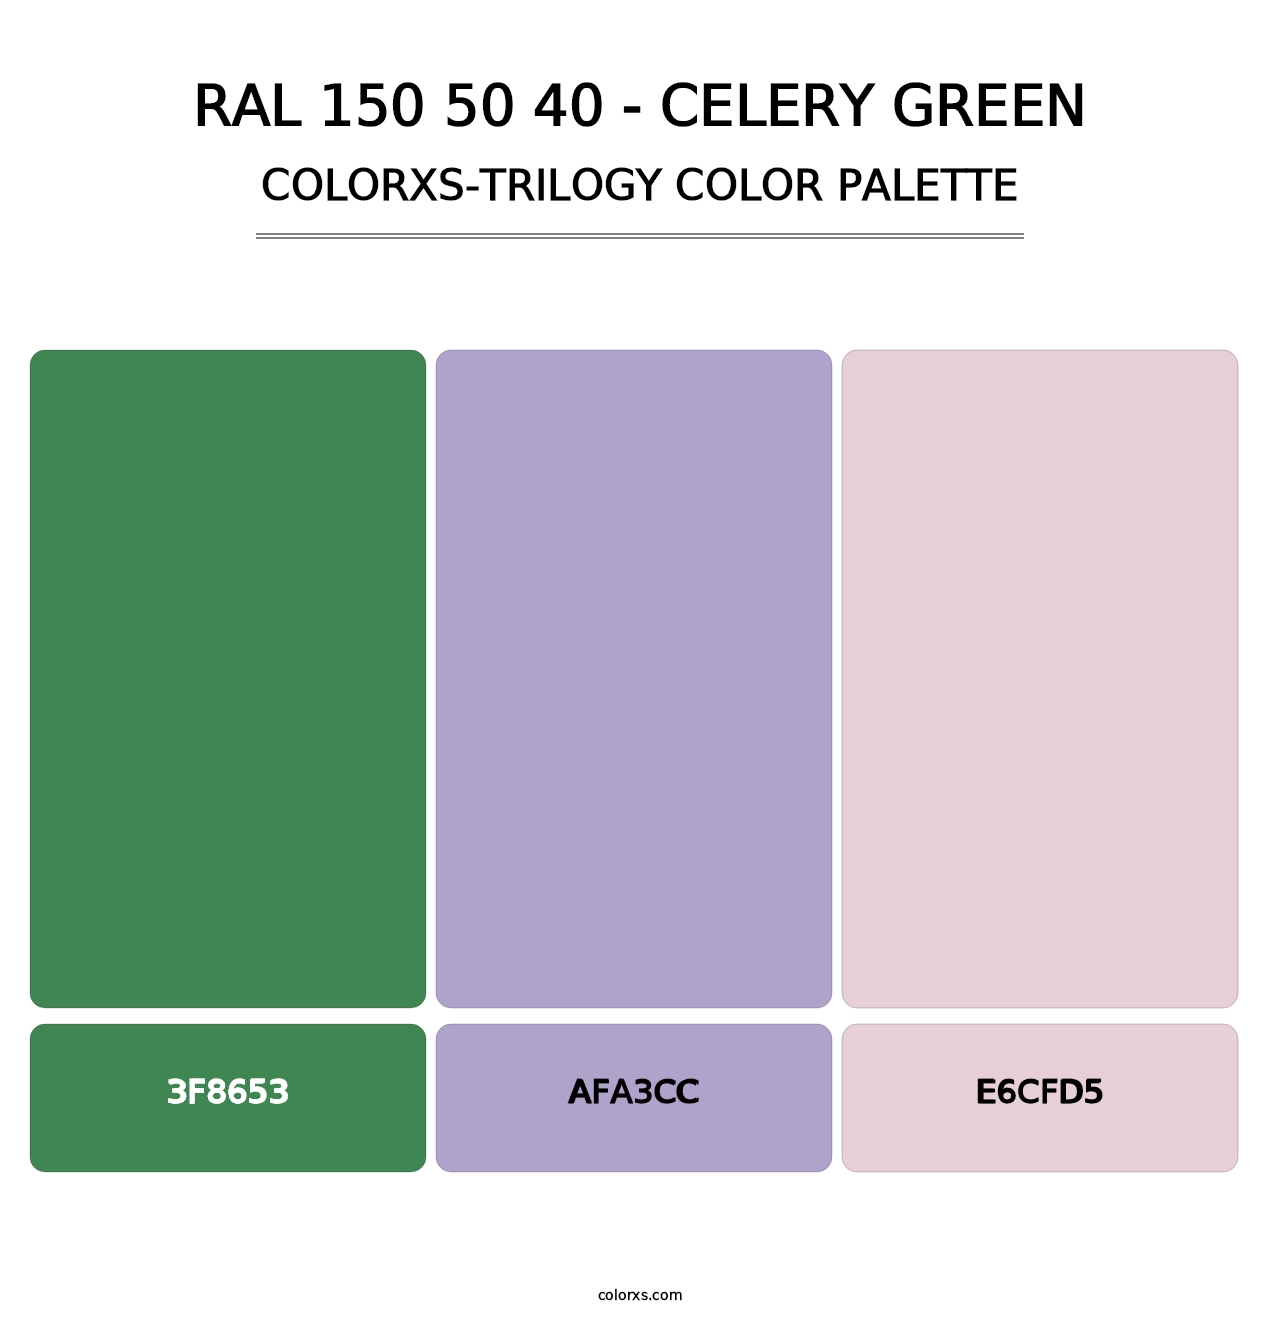 RAL 150 50 40 - Celery Green - Colorxs Trilogy Palette